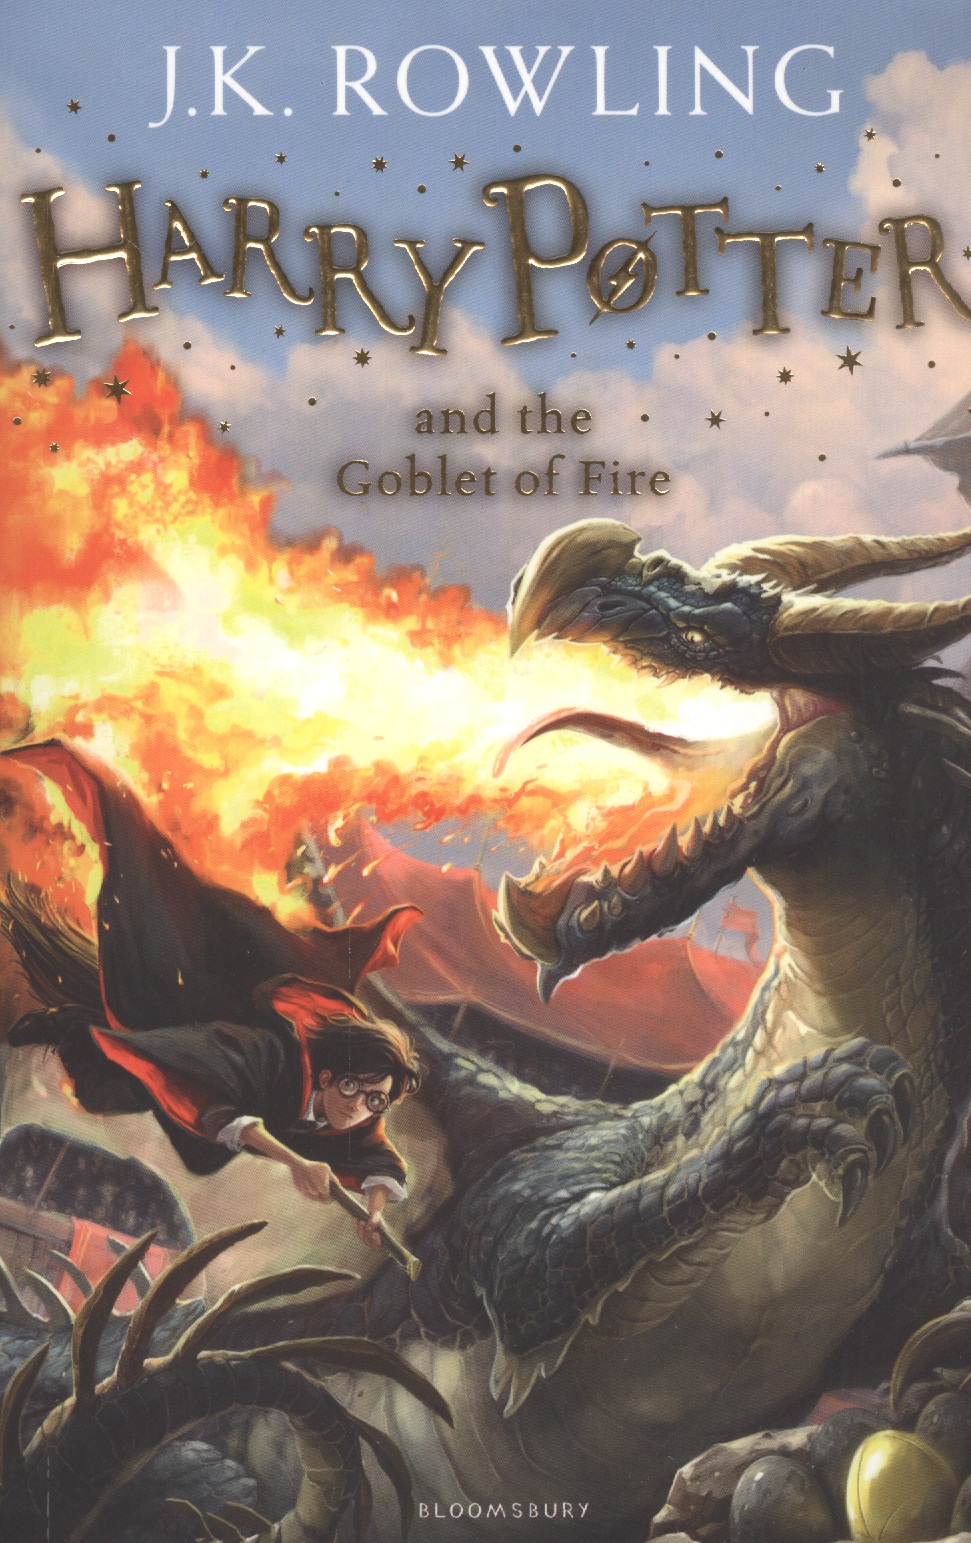 роулинг джоан кэтлин harry potter and the goblet of fire in reading order 4 Роулинг Джоан Кэтлин Harry Potter and the Goblet of Fire. (In reading order: 4)